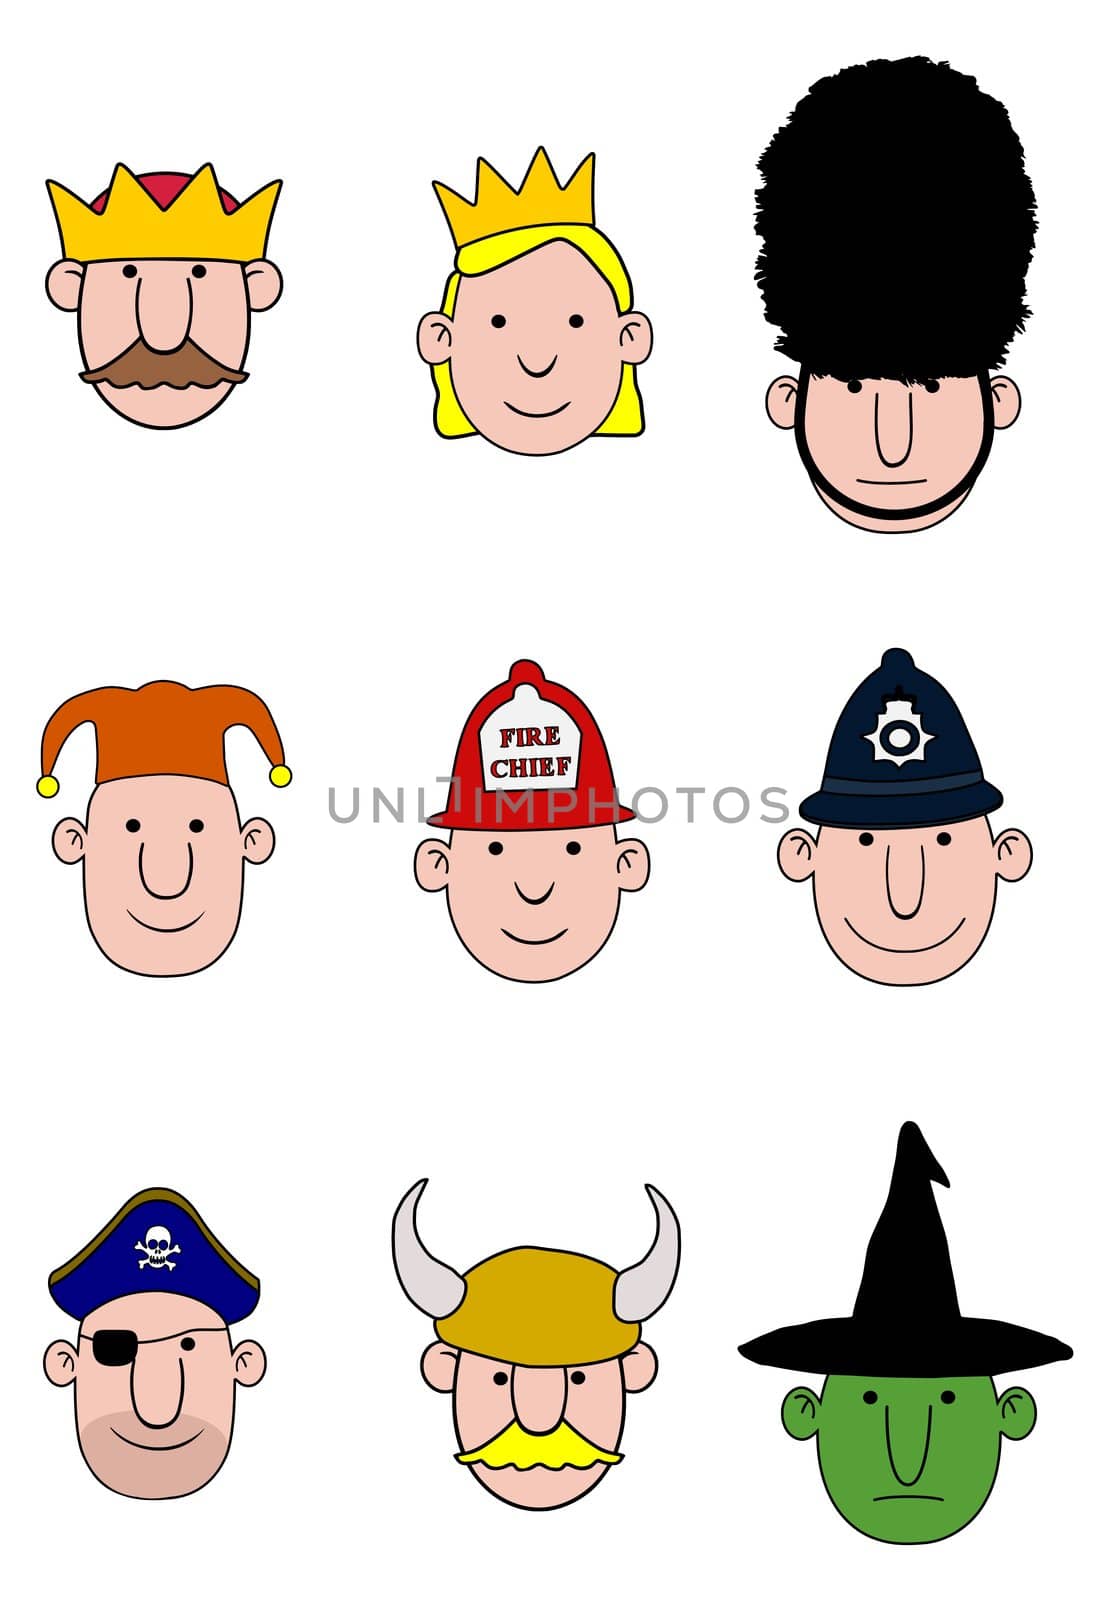 Illustration of nine cartoon character heads